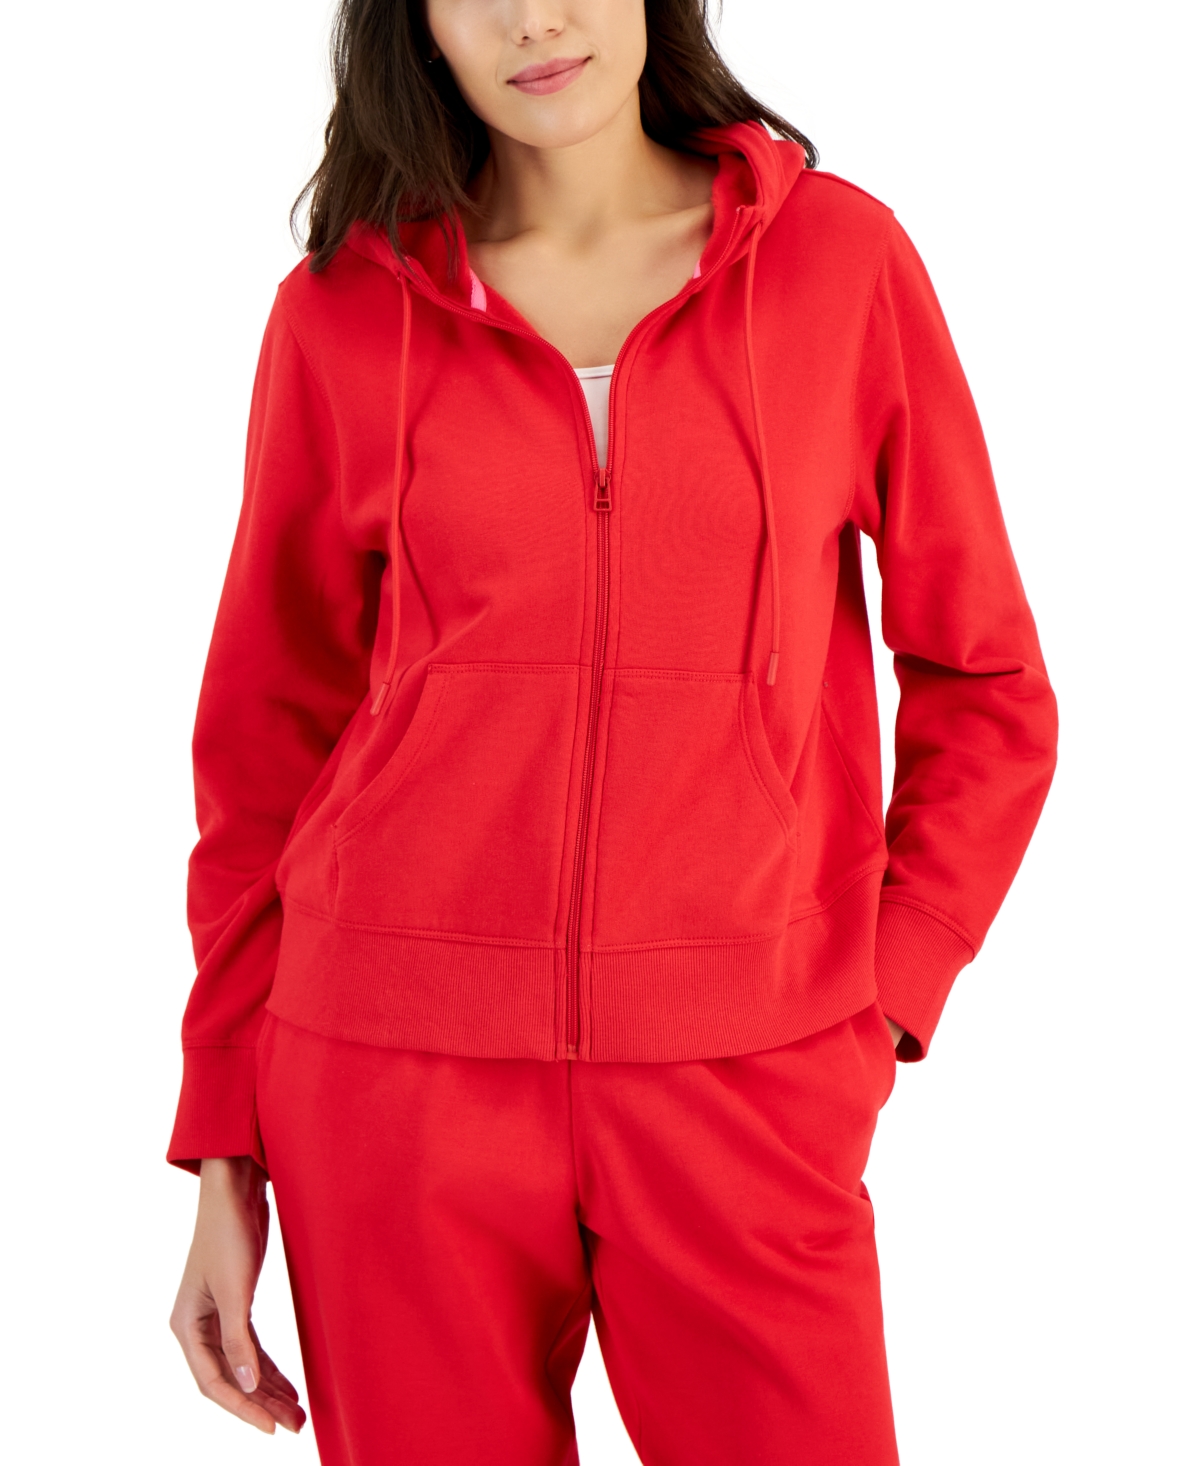 Women's Full-Zip Hooded Sweatshirt, Created for Macy's - Gumball Red